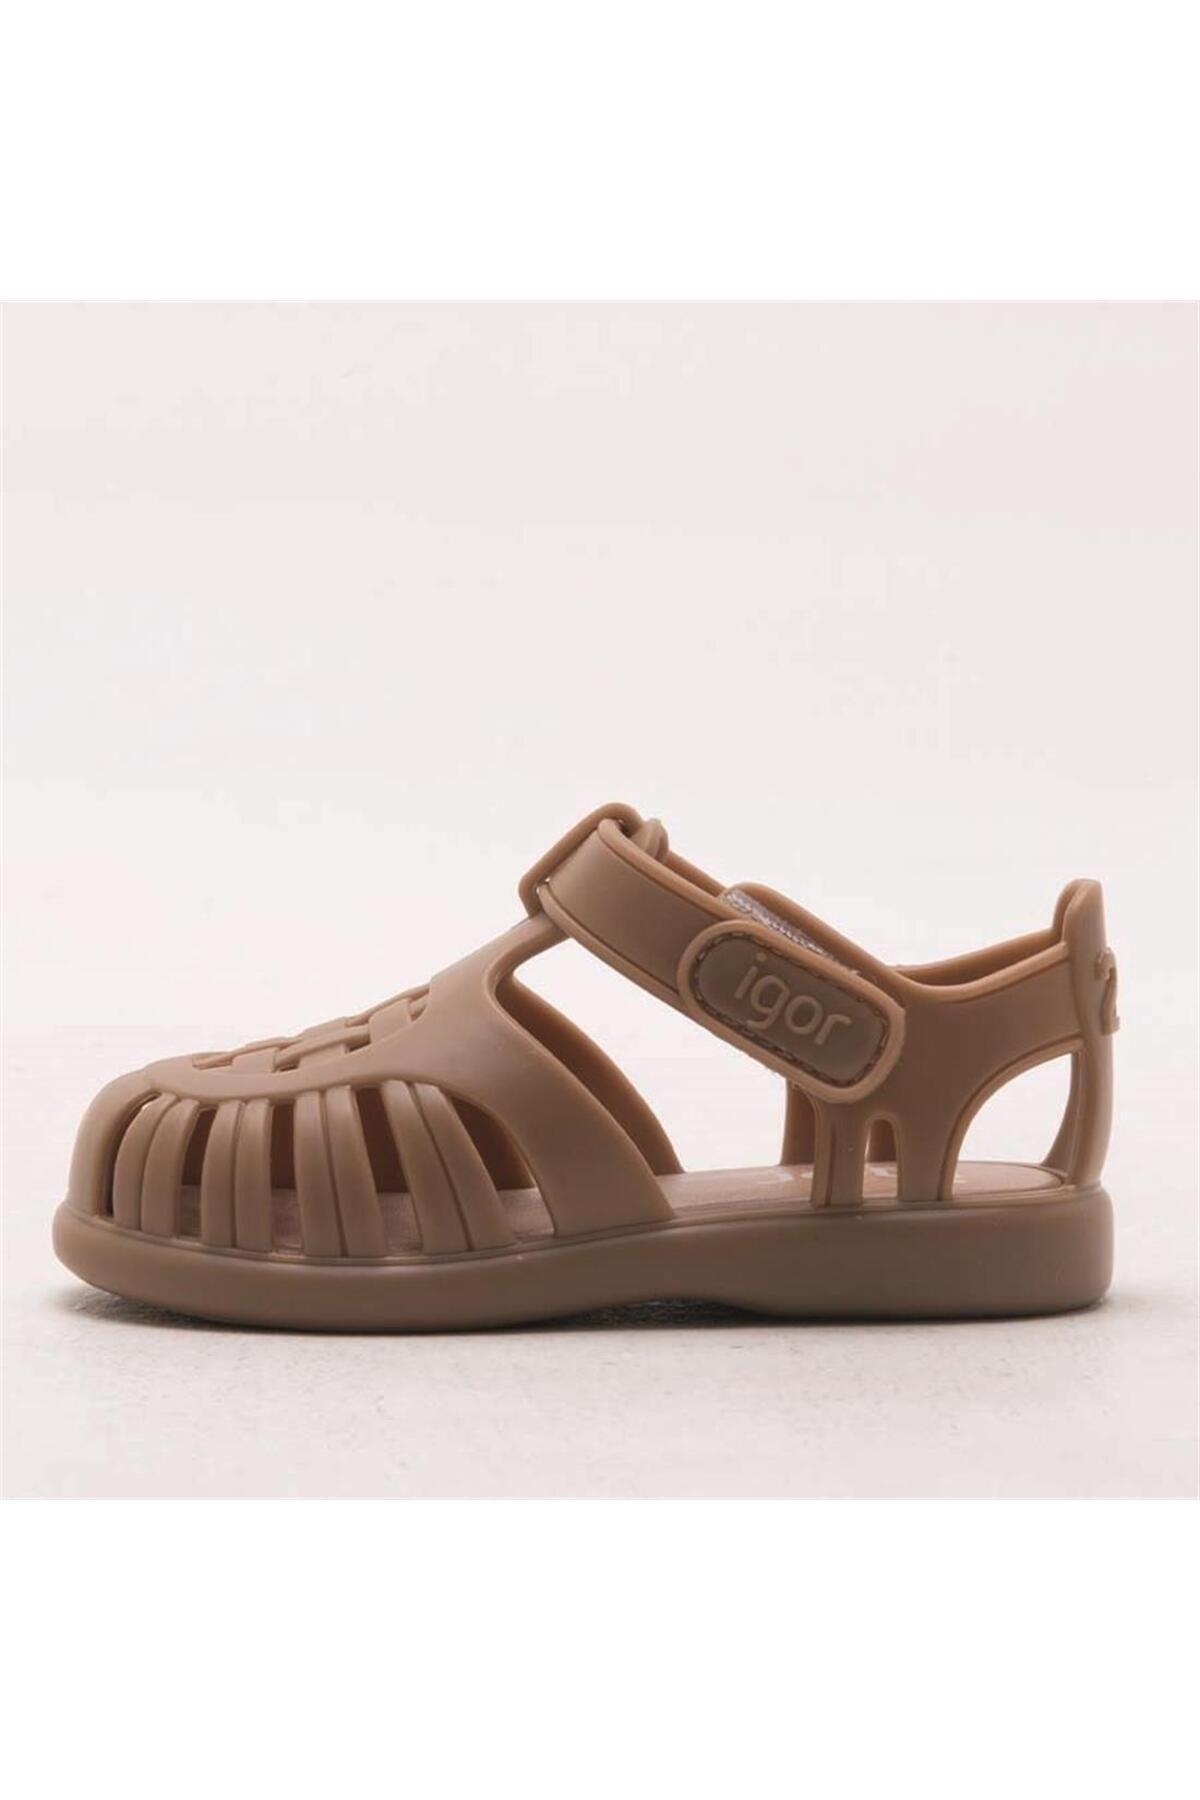 IGOR Tobby Solid Bebek-cocuk Sandalet S10271-013